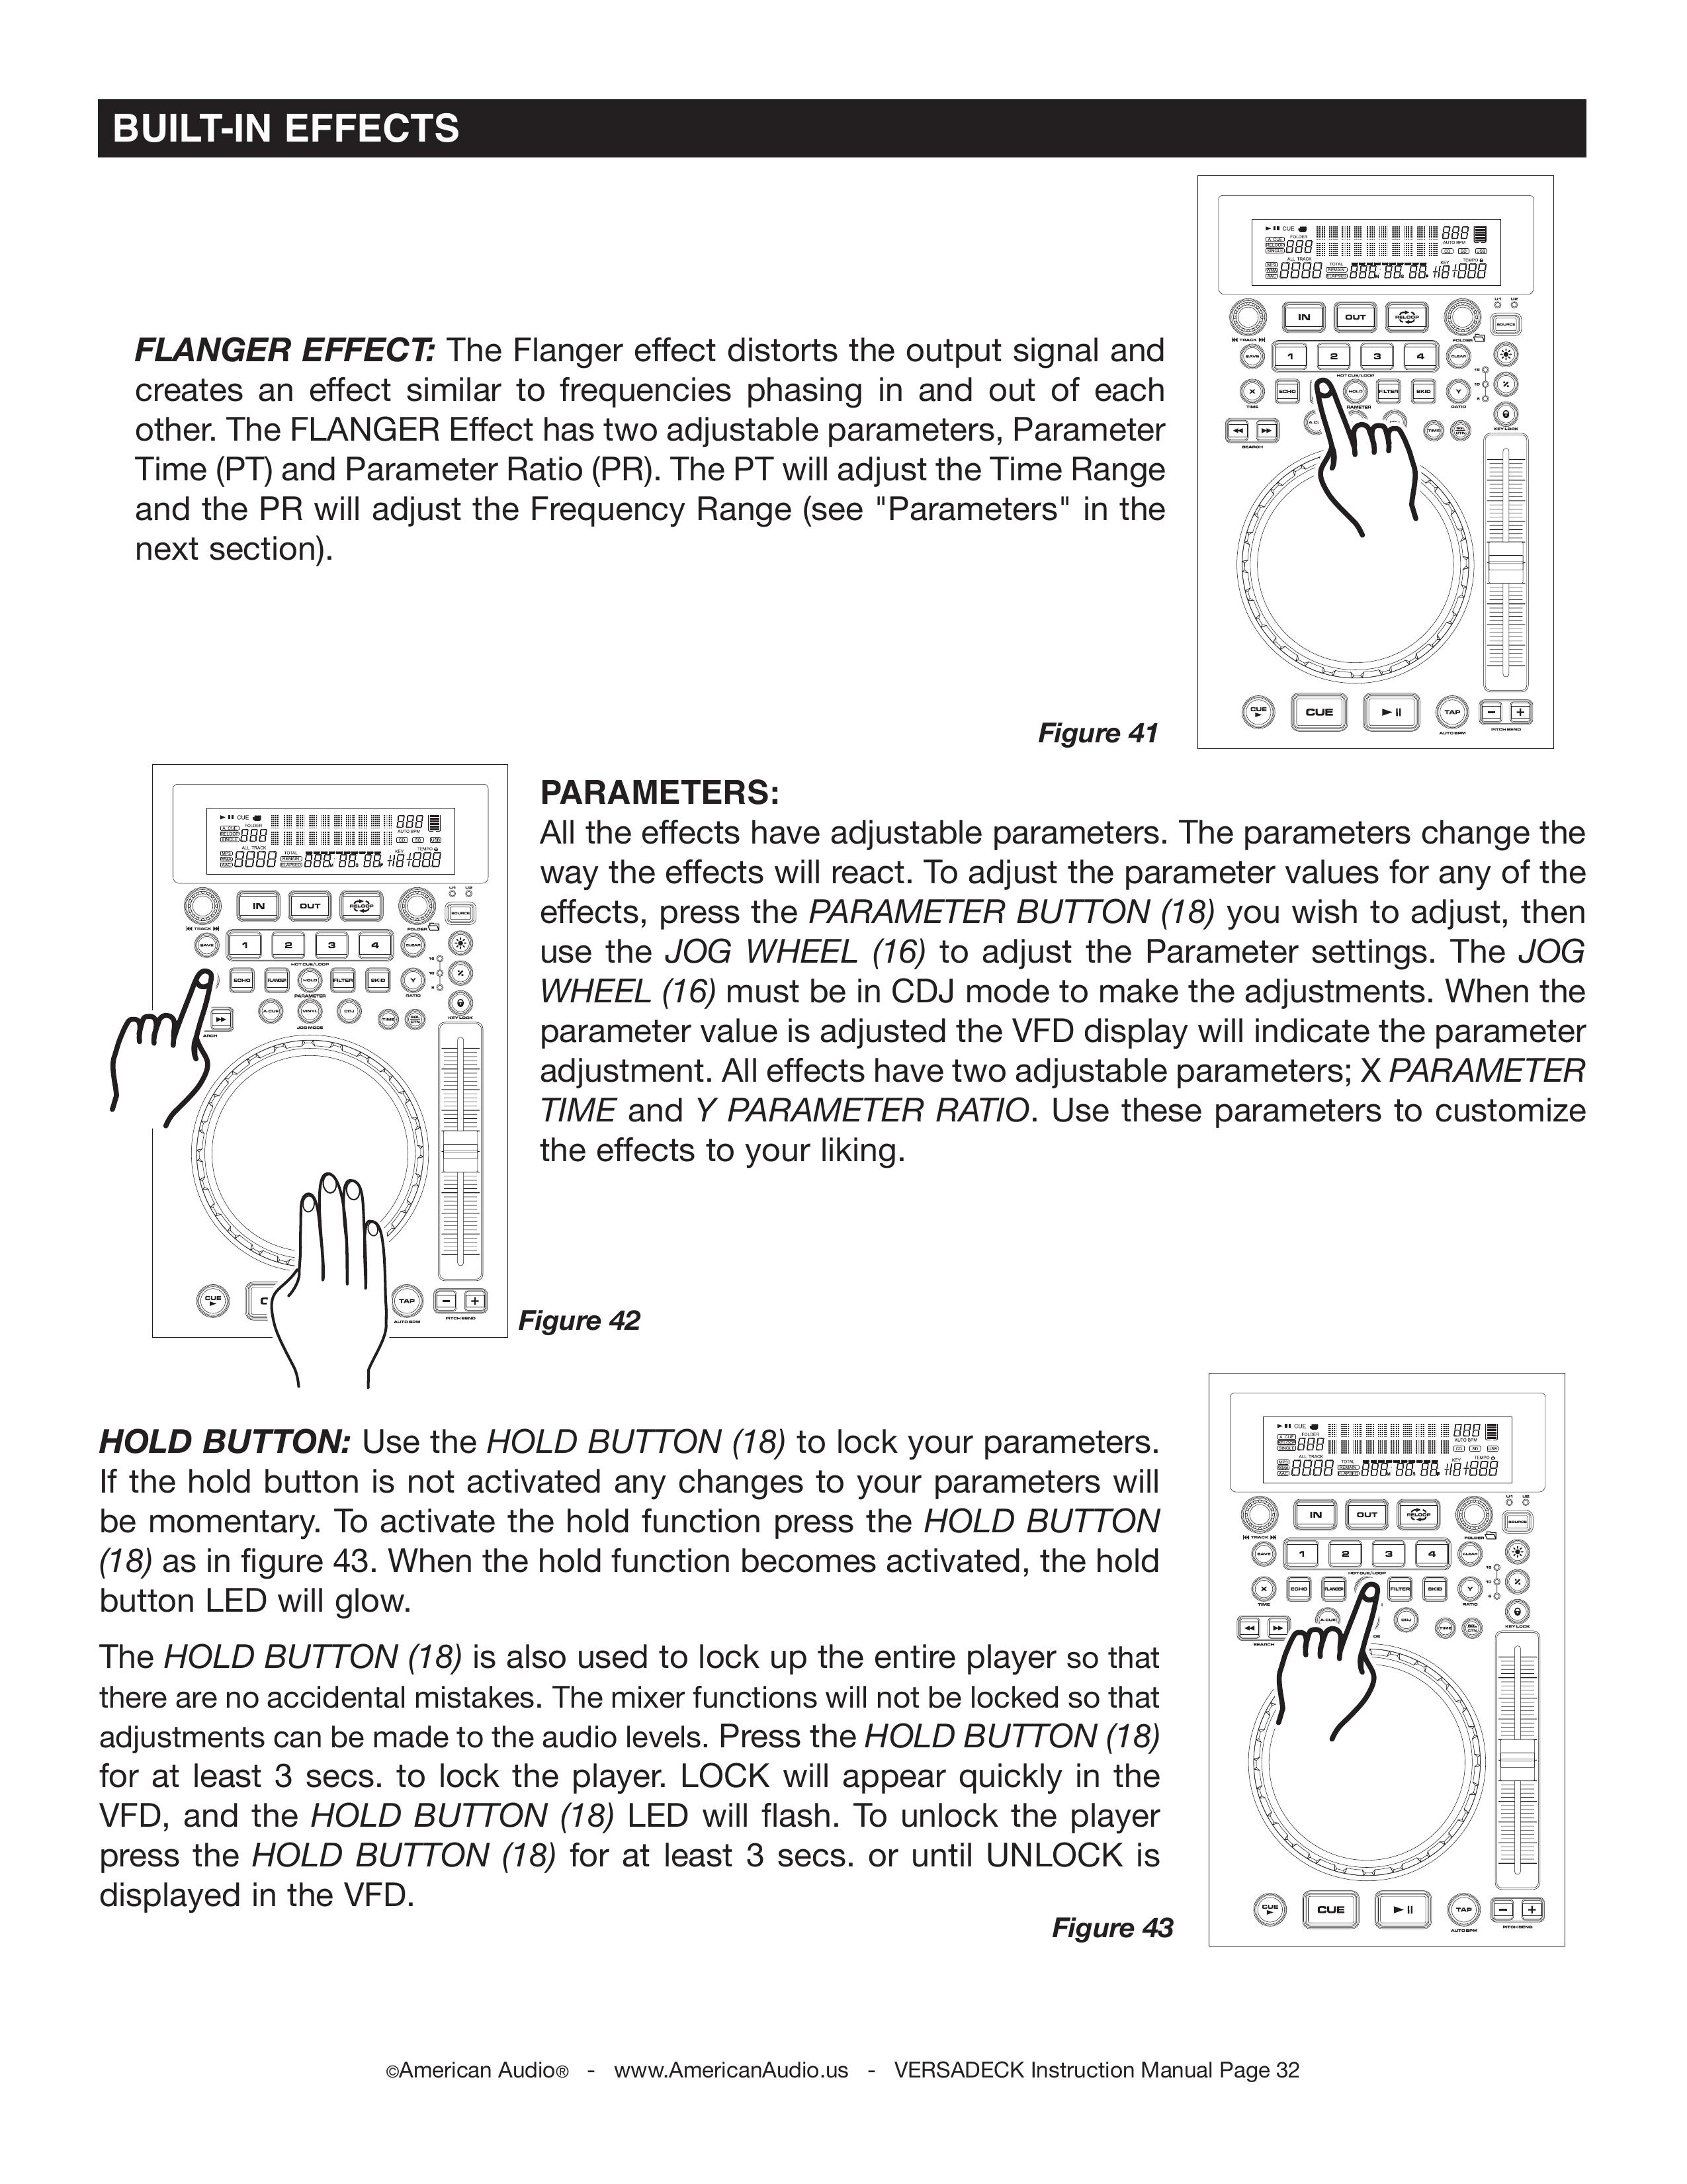 American Audio Versadeck DJ Equipment User Manual (Page 32)